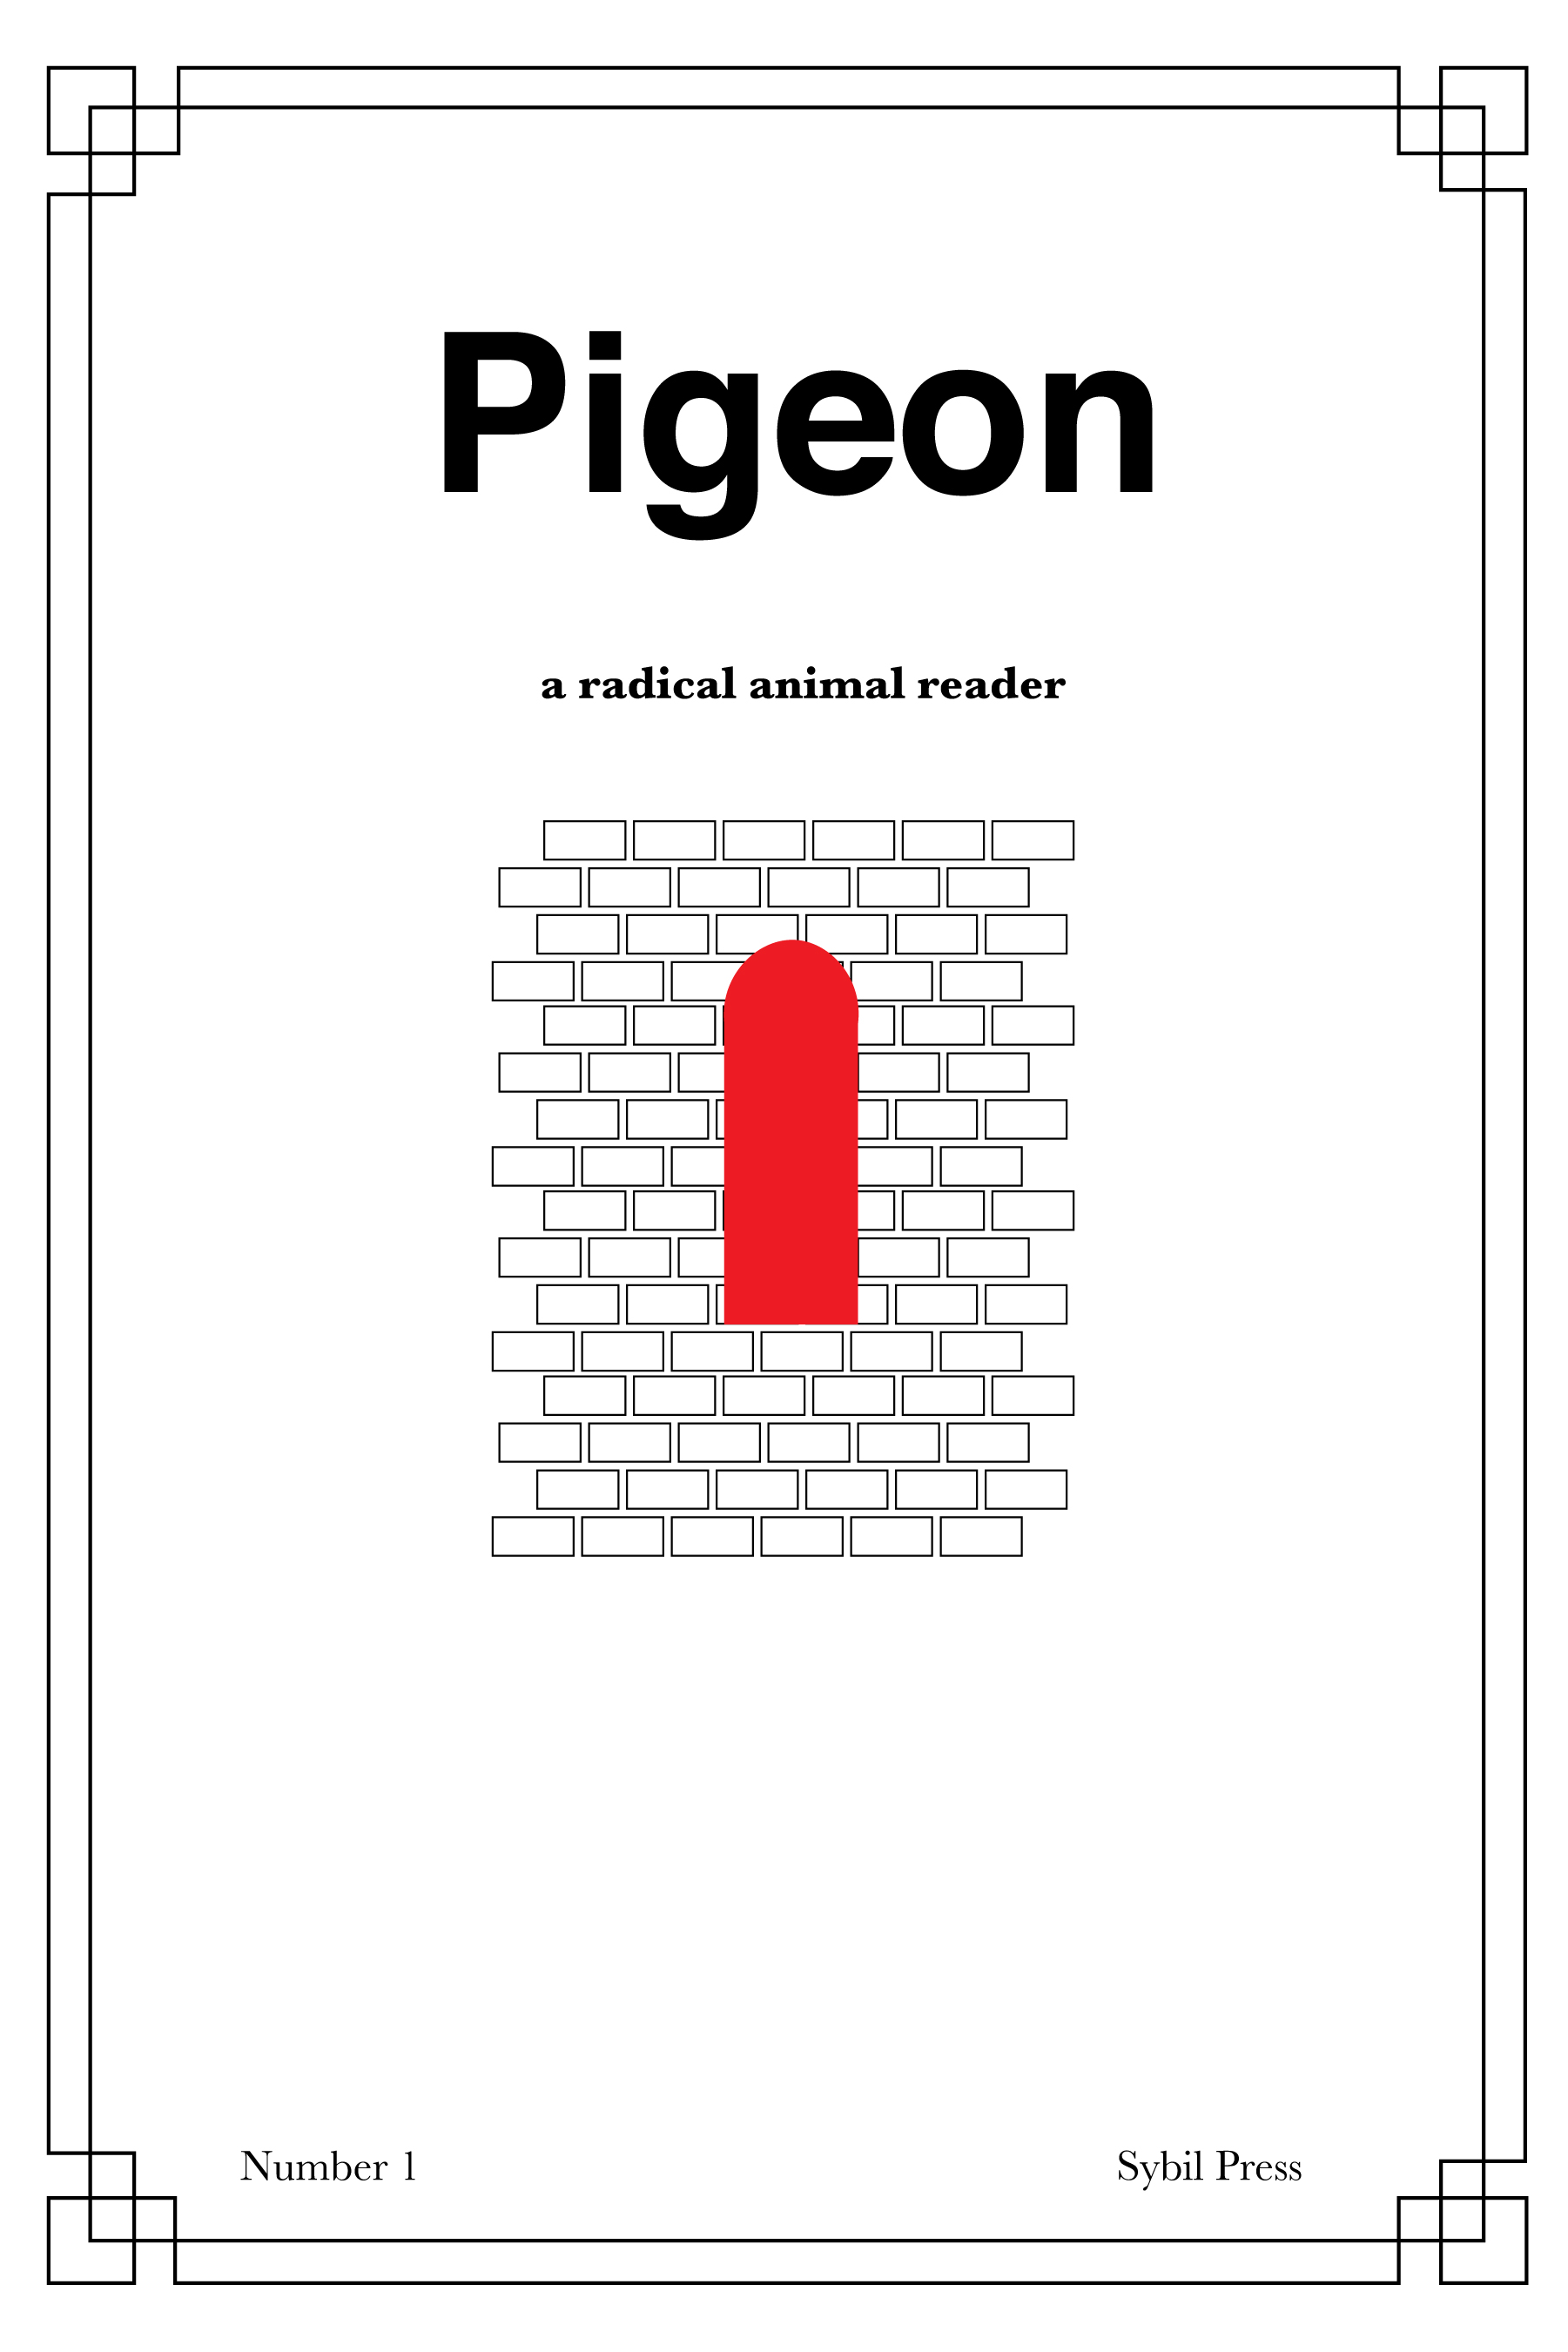 gomez_pigeon_illustrations2018-01.jpg